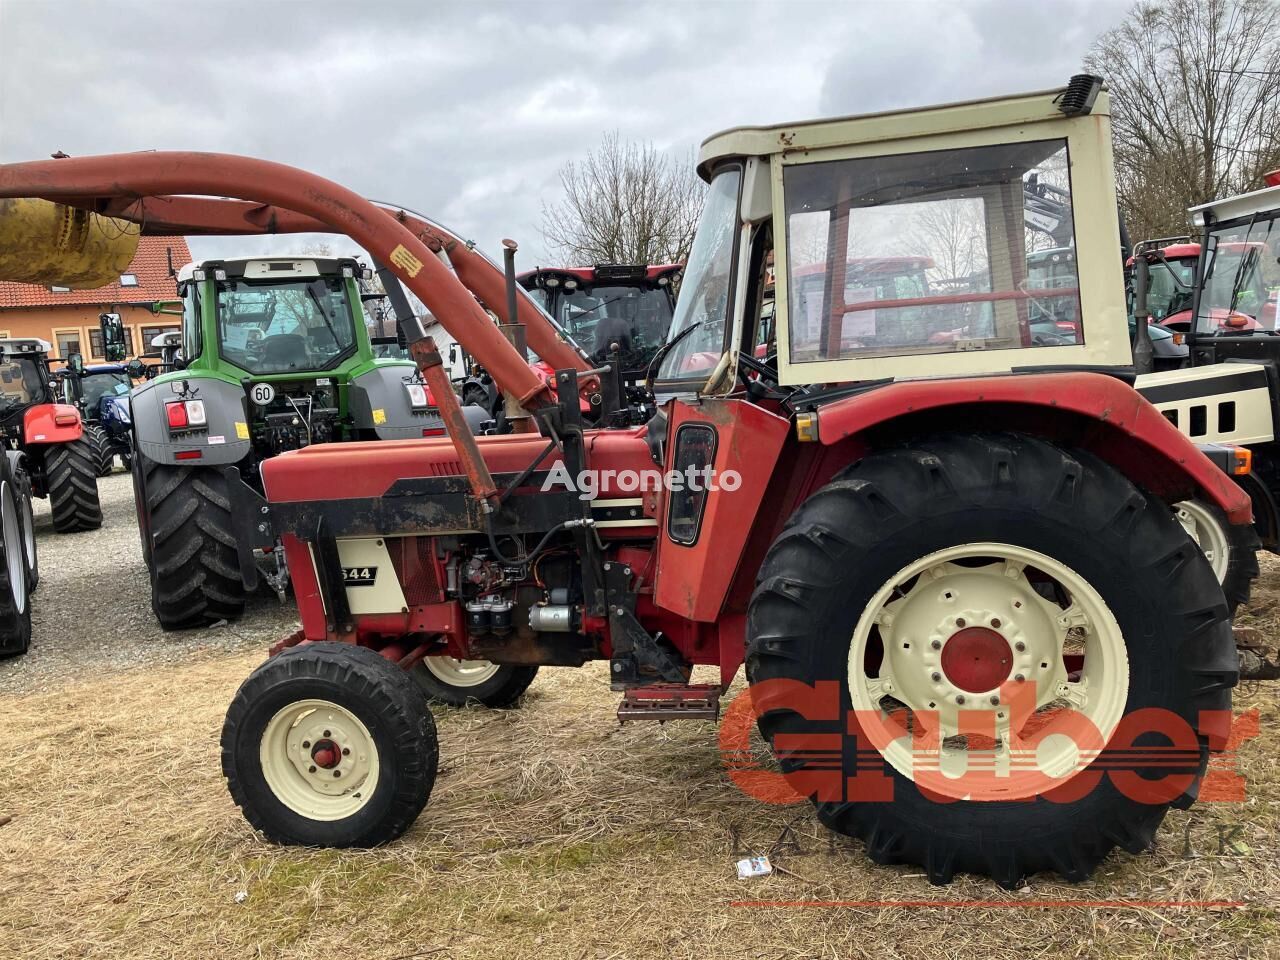 644 wheel tractor